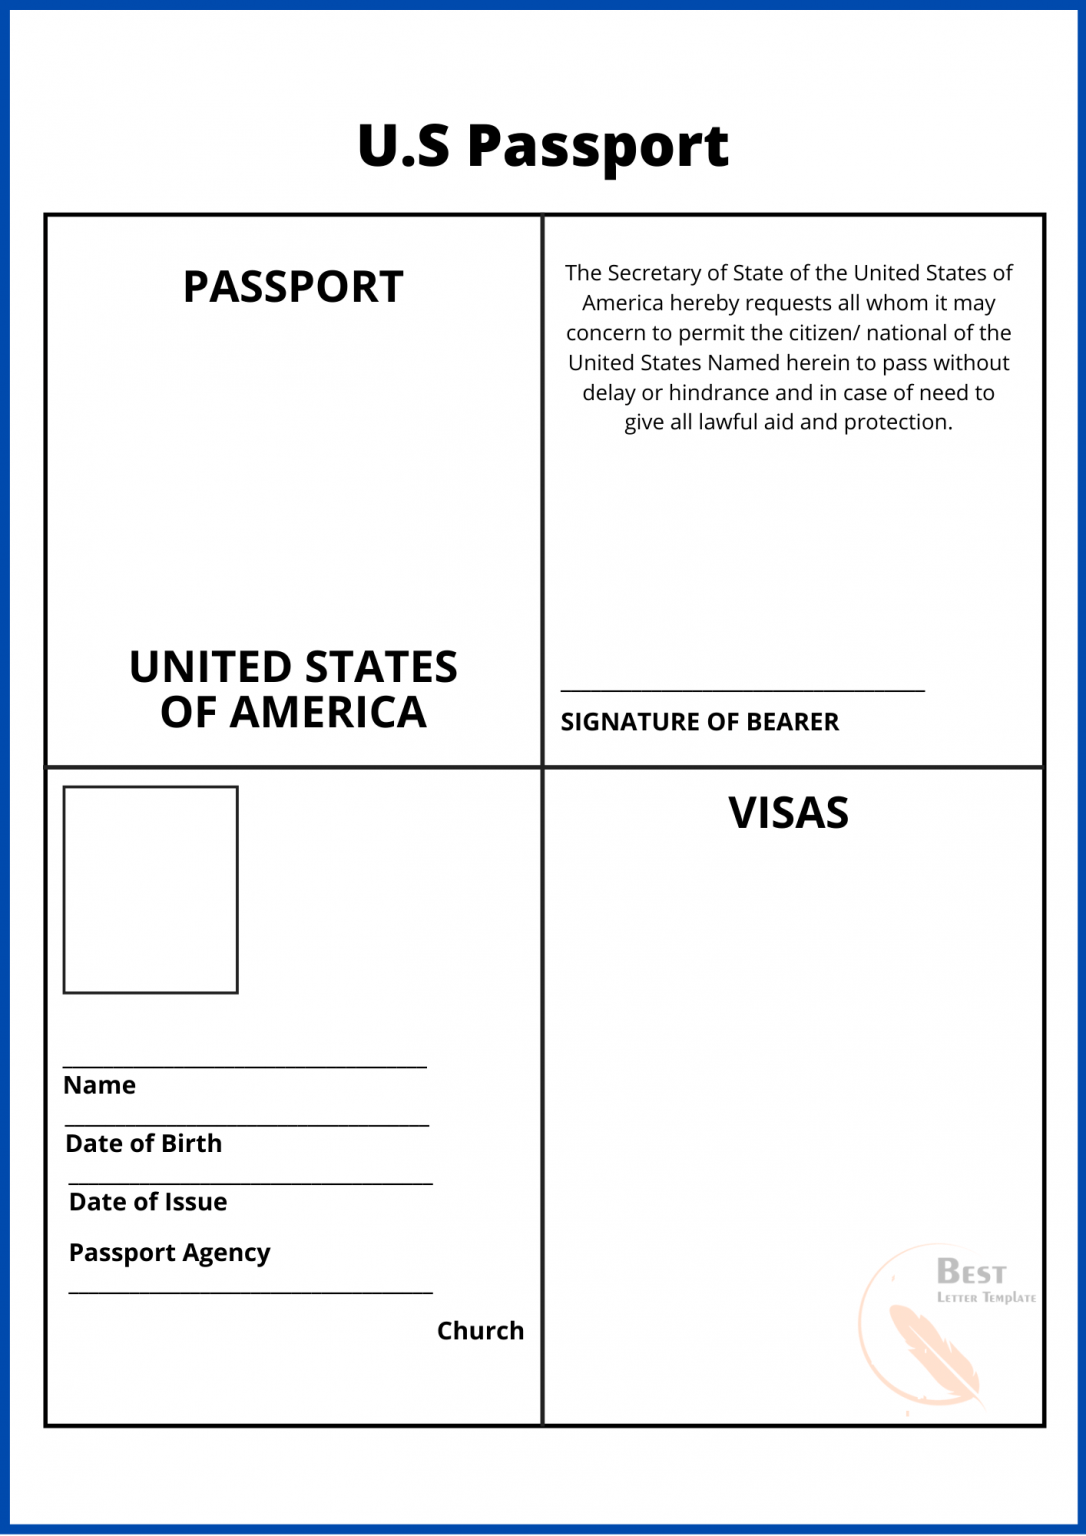 fake international passport image generator